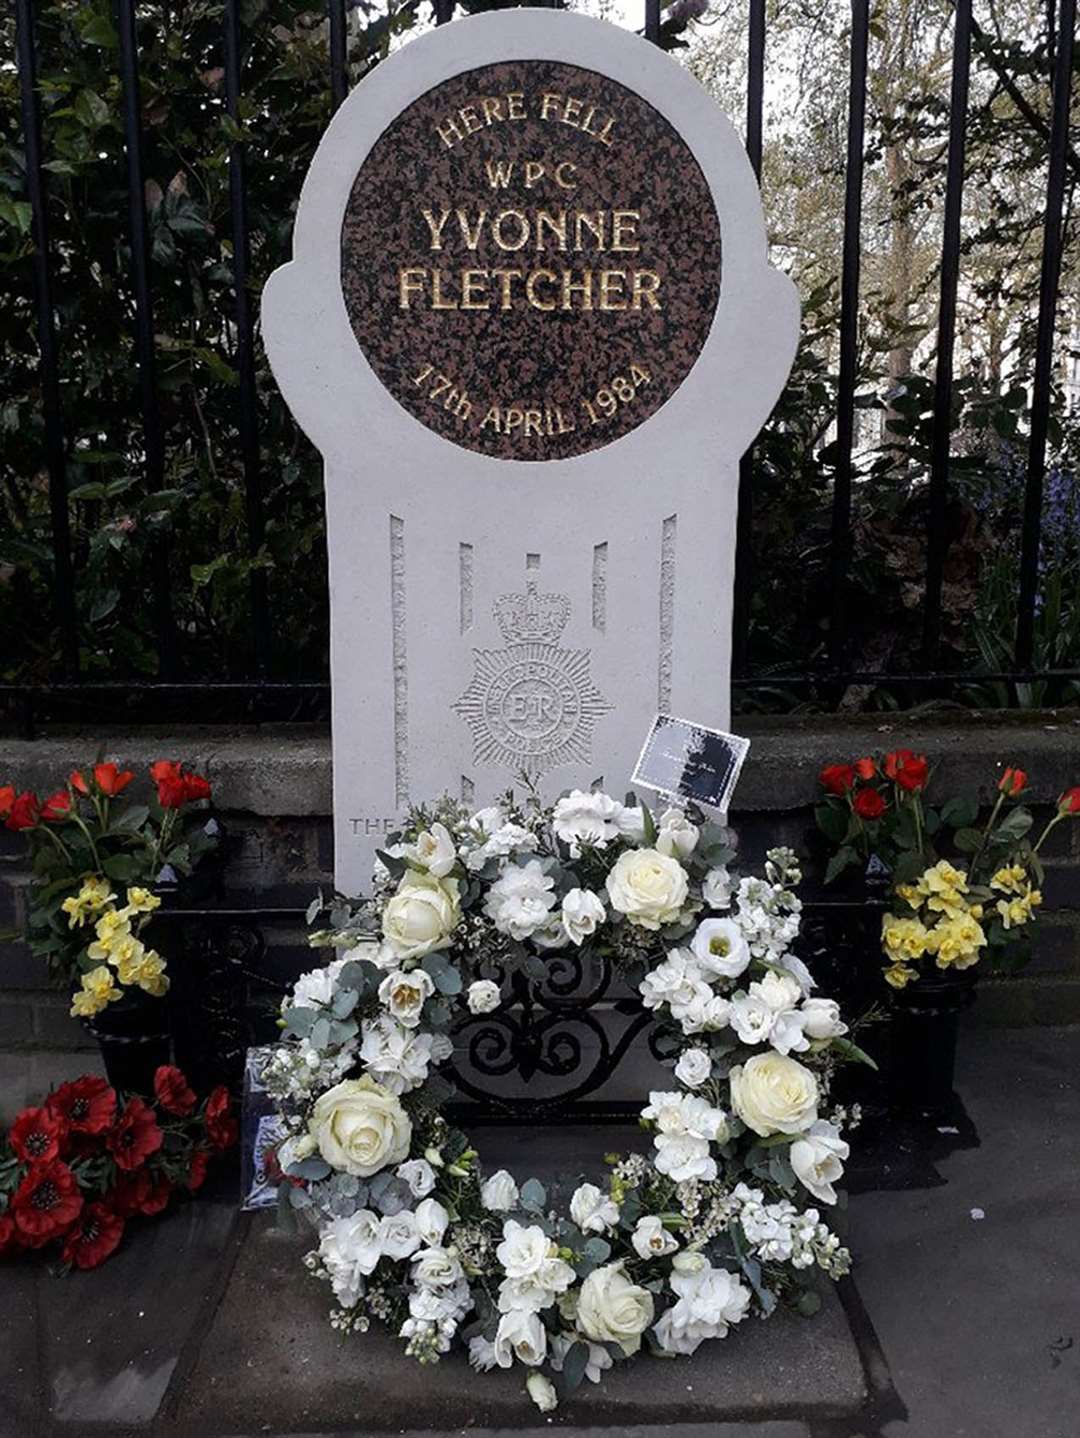 The memorial to Yvonne Fletcher in St James’s Square, central London (Metropolitan Police/PA)